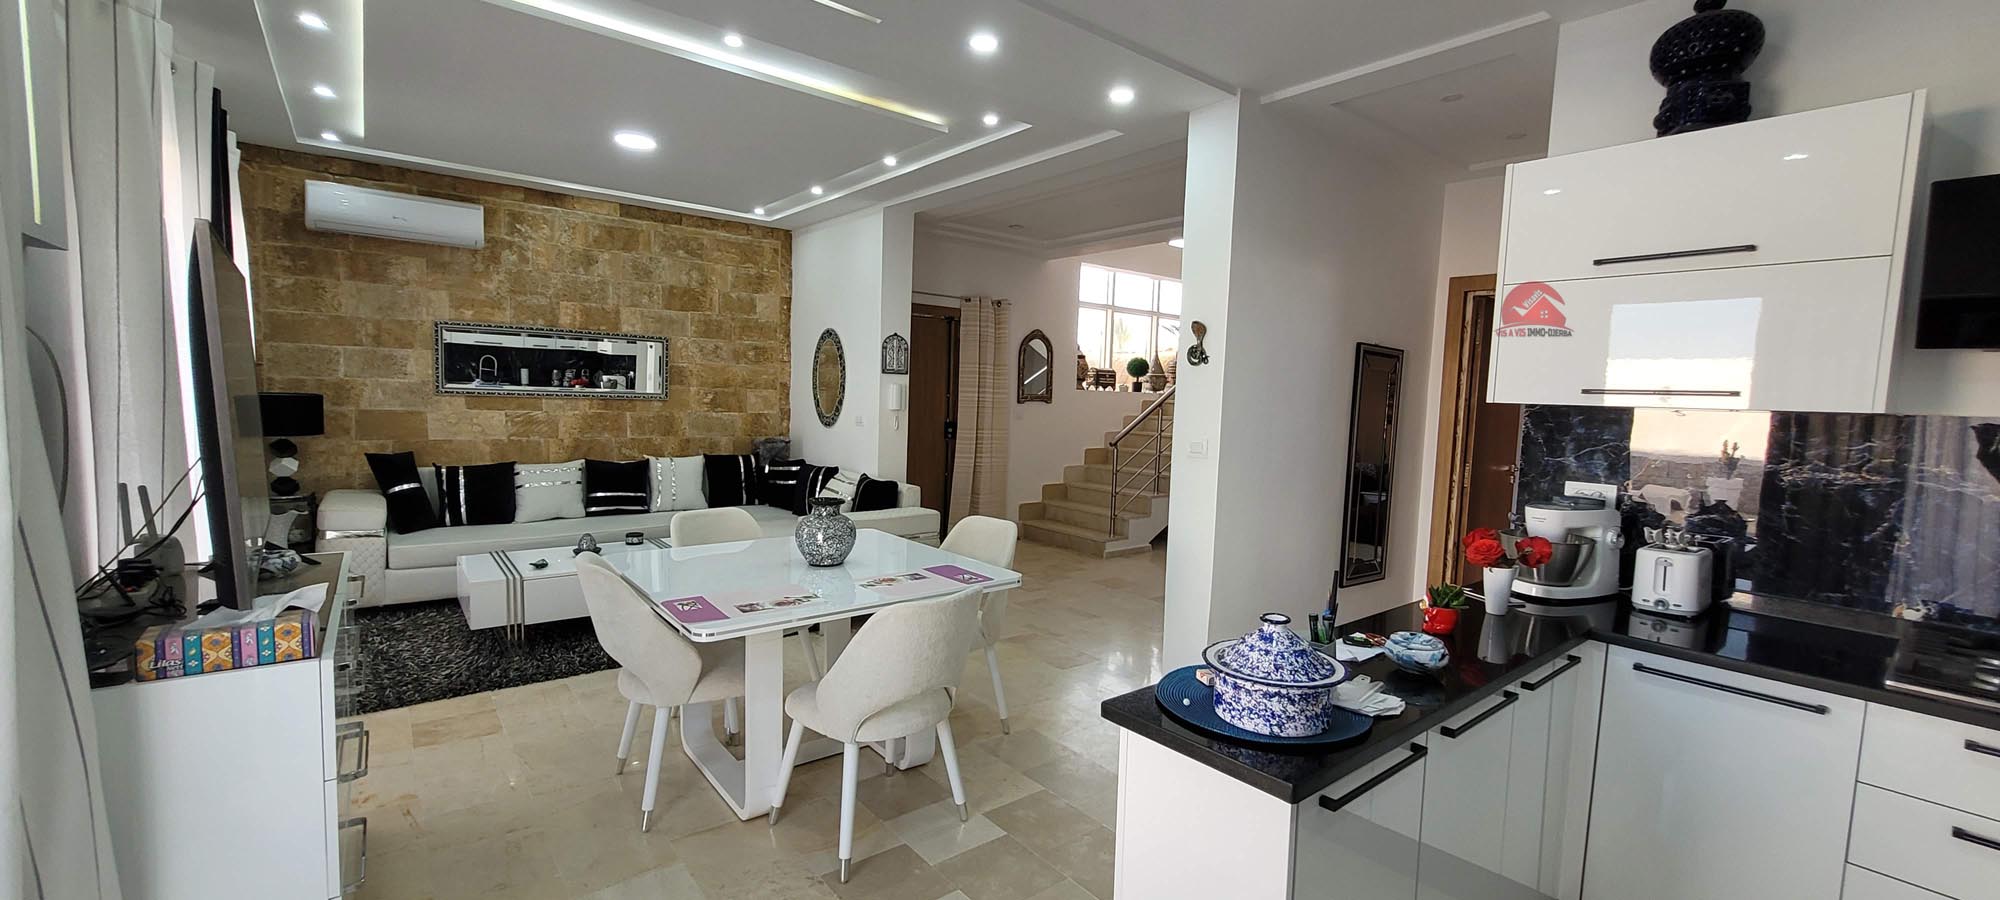 Djerba - Midoun Aghir Vente Maisons Villa meublee a aghir djerba  ref v672